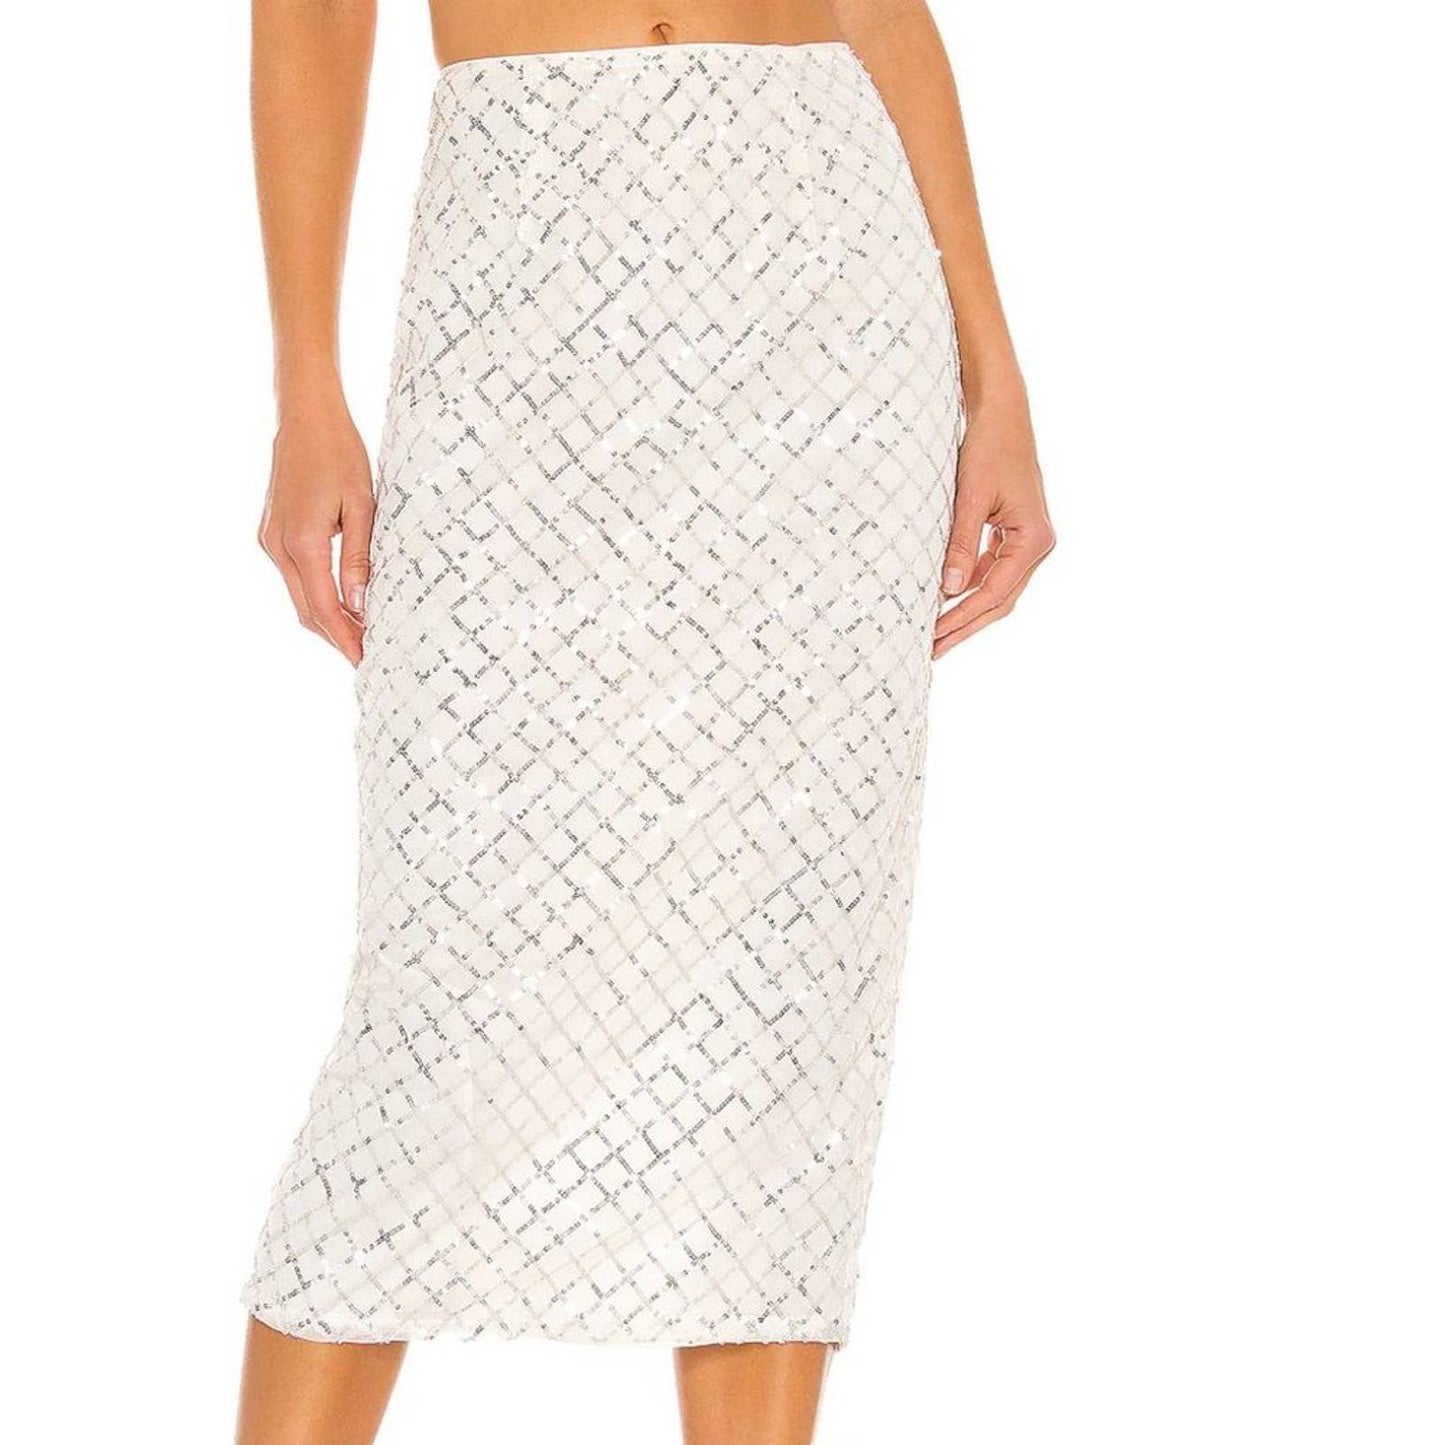 Camila Coelho Enrico Midi Skirt in Silver NWT Size Small